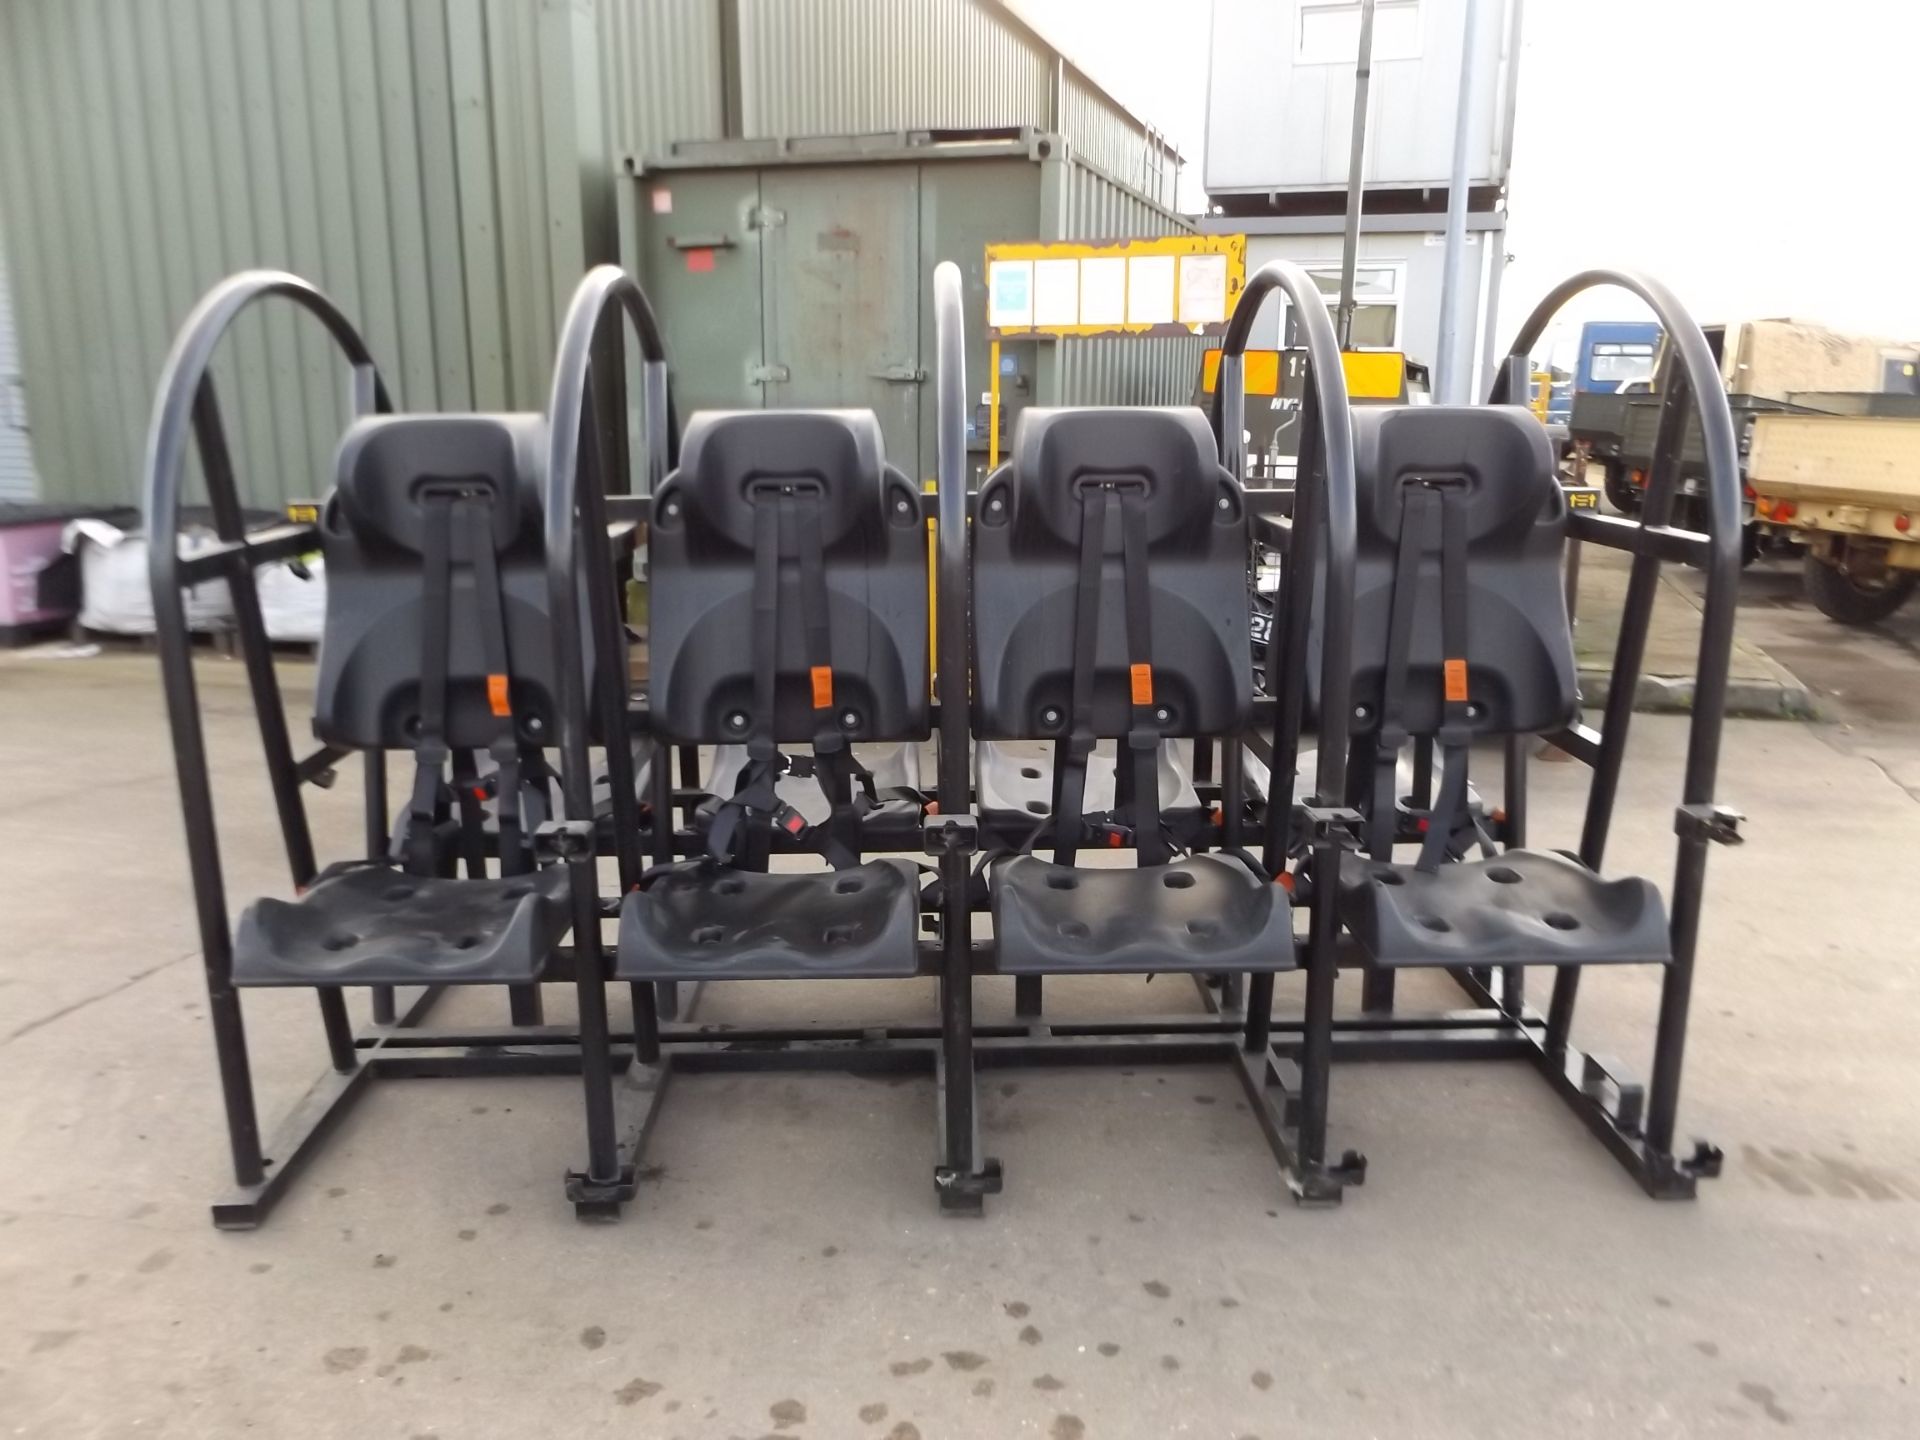 Roush Technologies 8 Man GSV Enhanced Seating Kit suitable for Leyland Dafs, Bedfords etc - Image 4 of 6